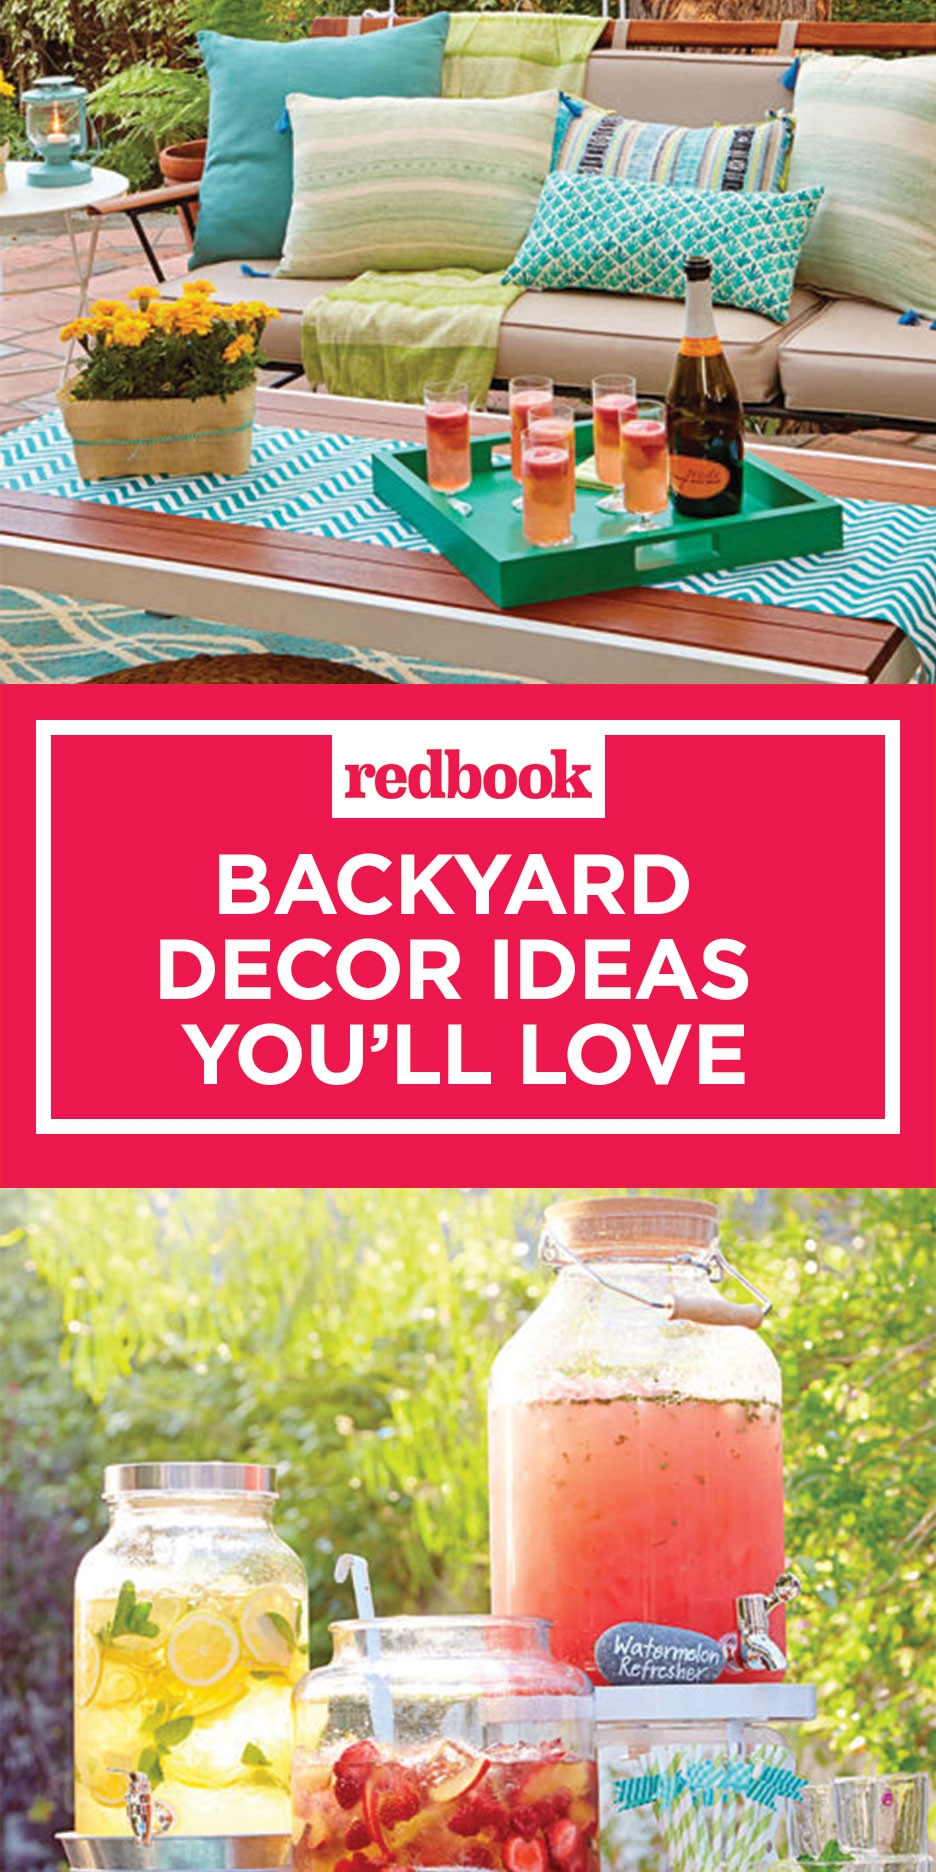 Pinterest Backyard Party Ideas
 14 Best Backyard Party Ideas for Adults Summer